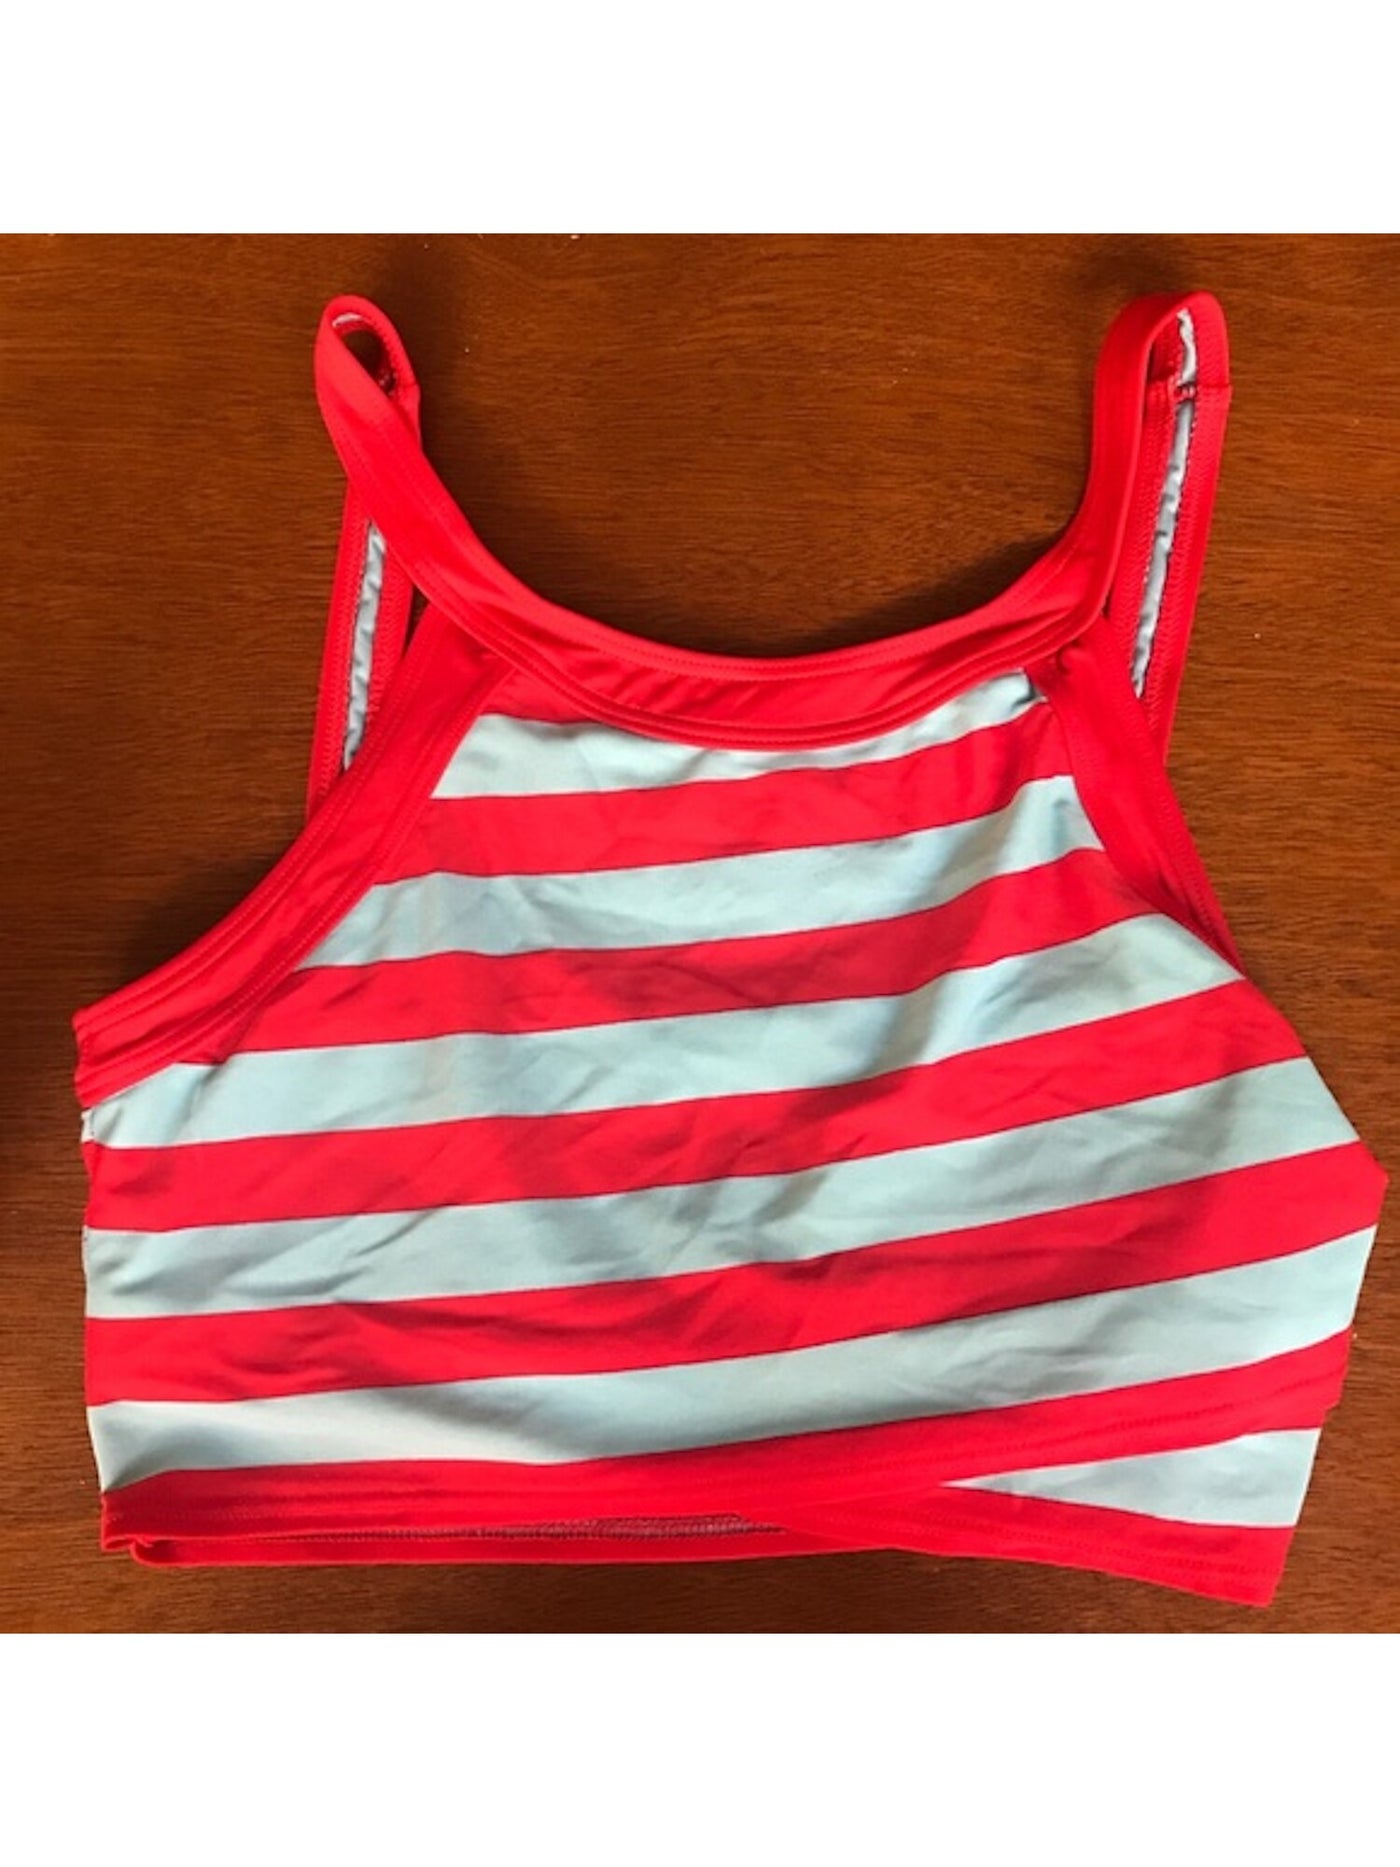 DKNY Women's Red Striped Nylon High Neck Swimwear Top XS